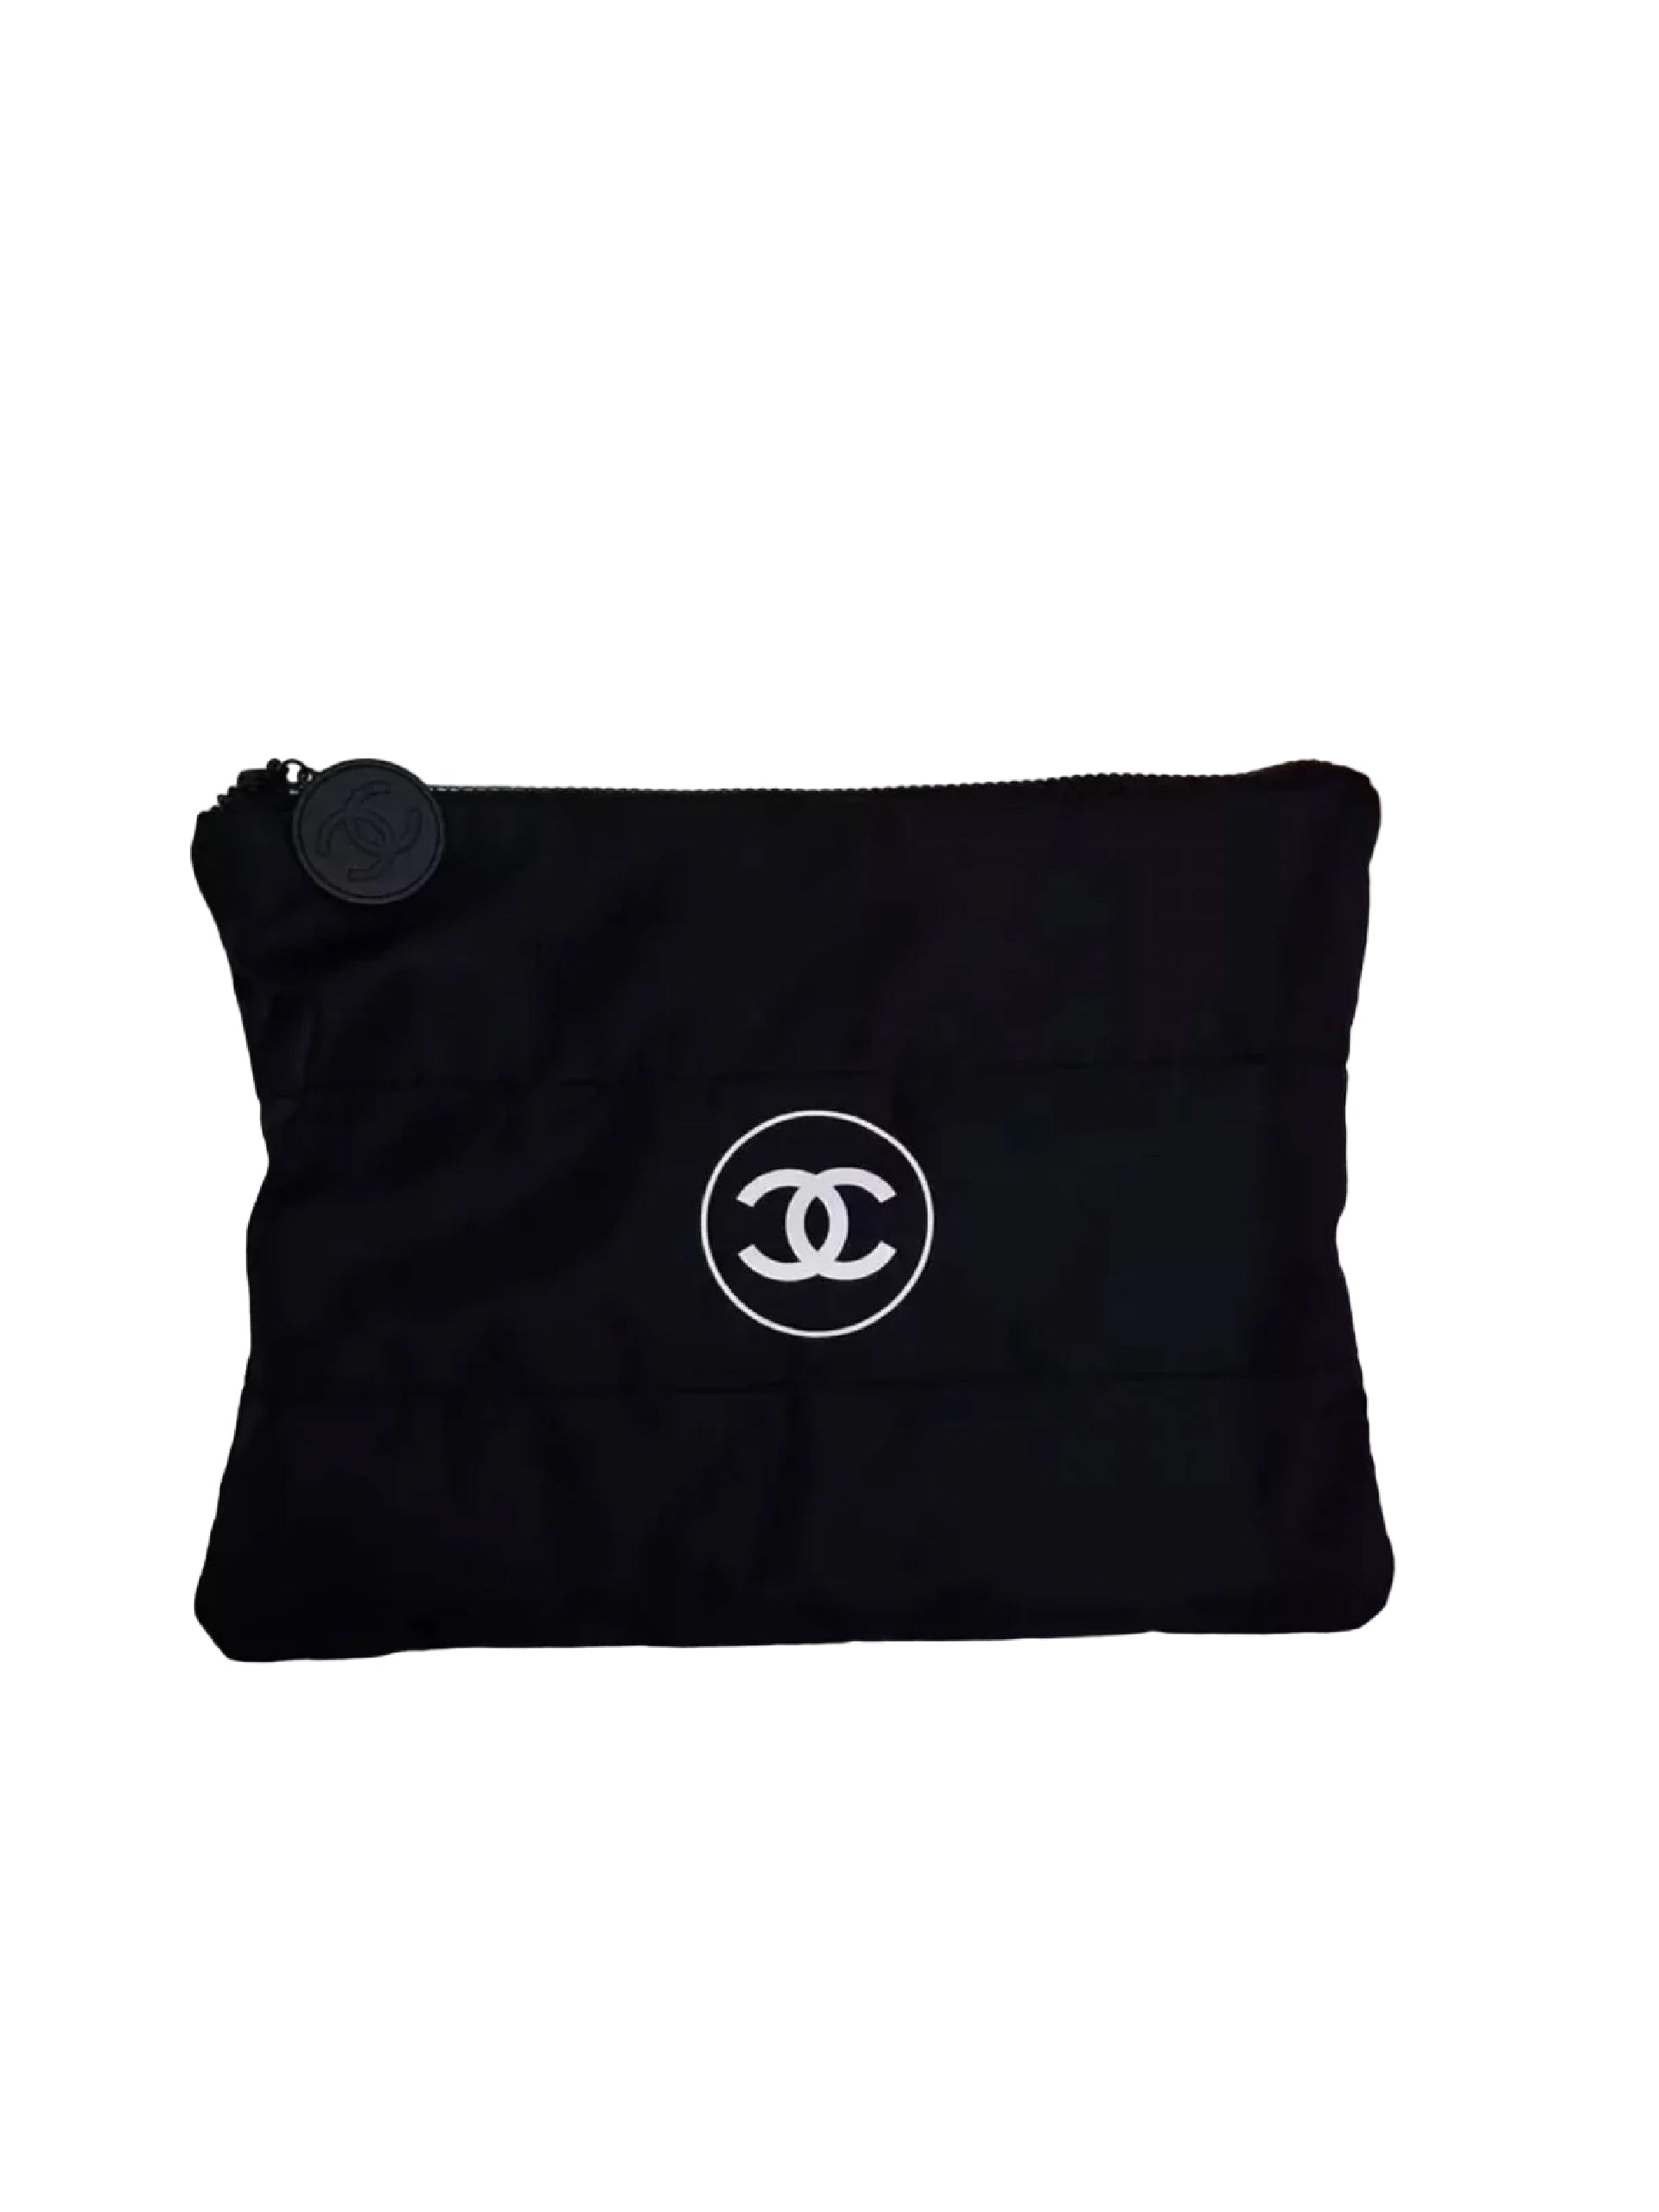 Chanel Les Beiges Puffy Pouch (Bag) - Black